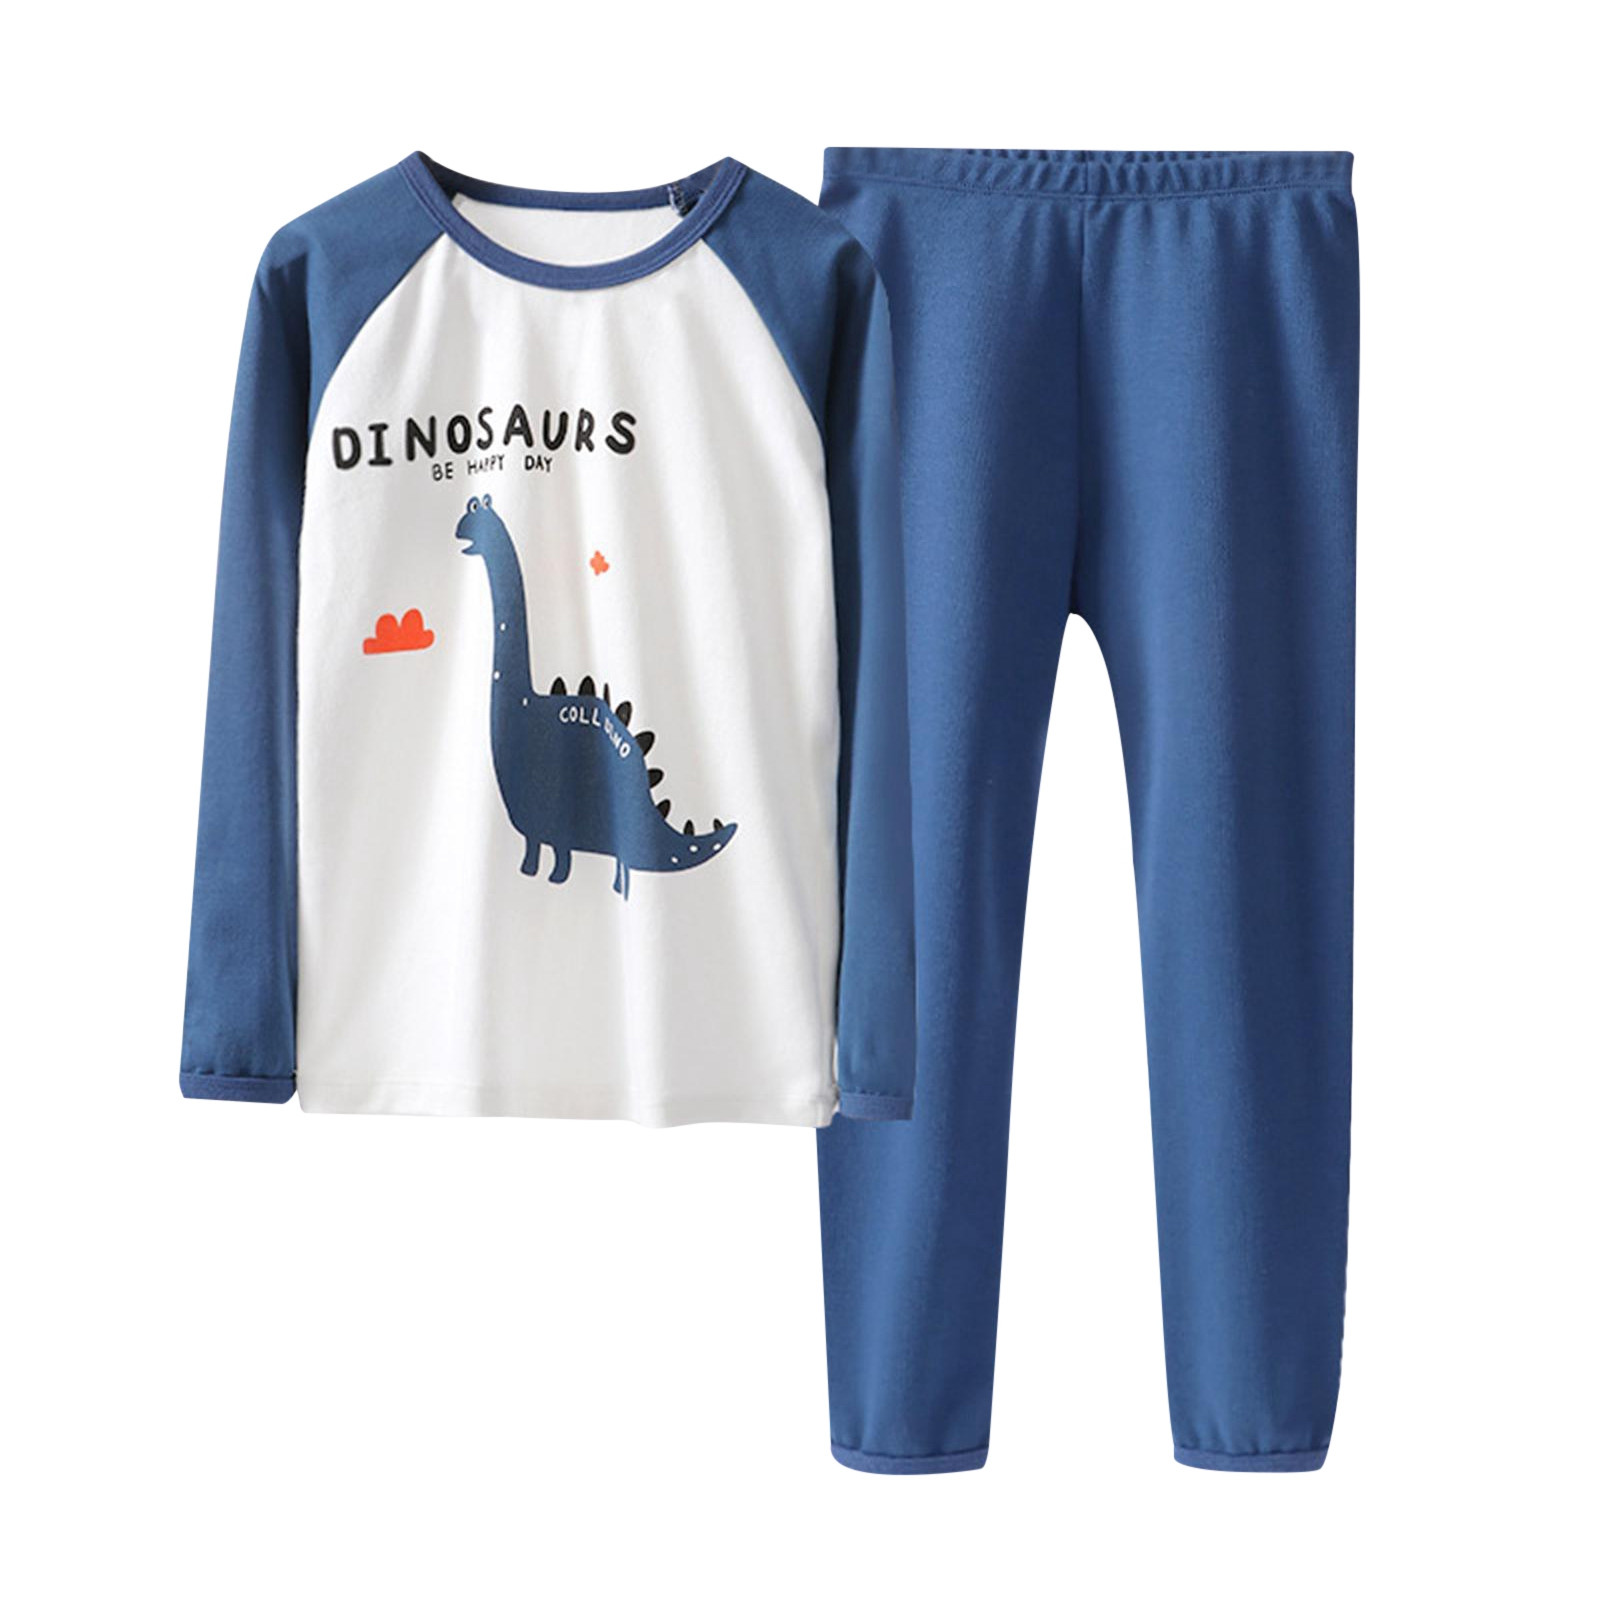 Toddler Boys Pajamas Sets Childrens Underwear Set Cotton Long Sleeve ...